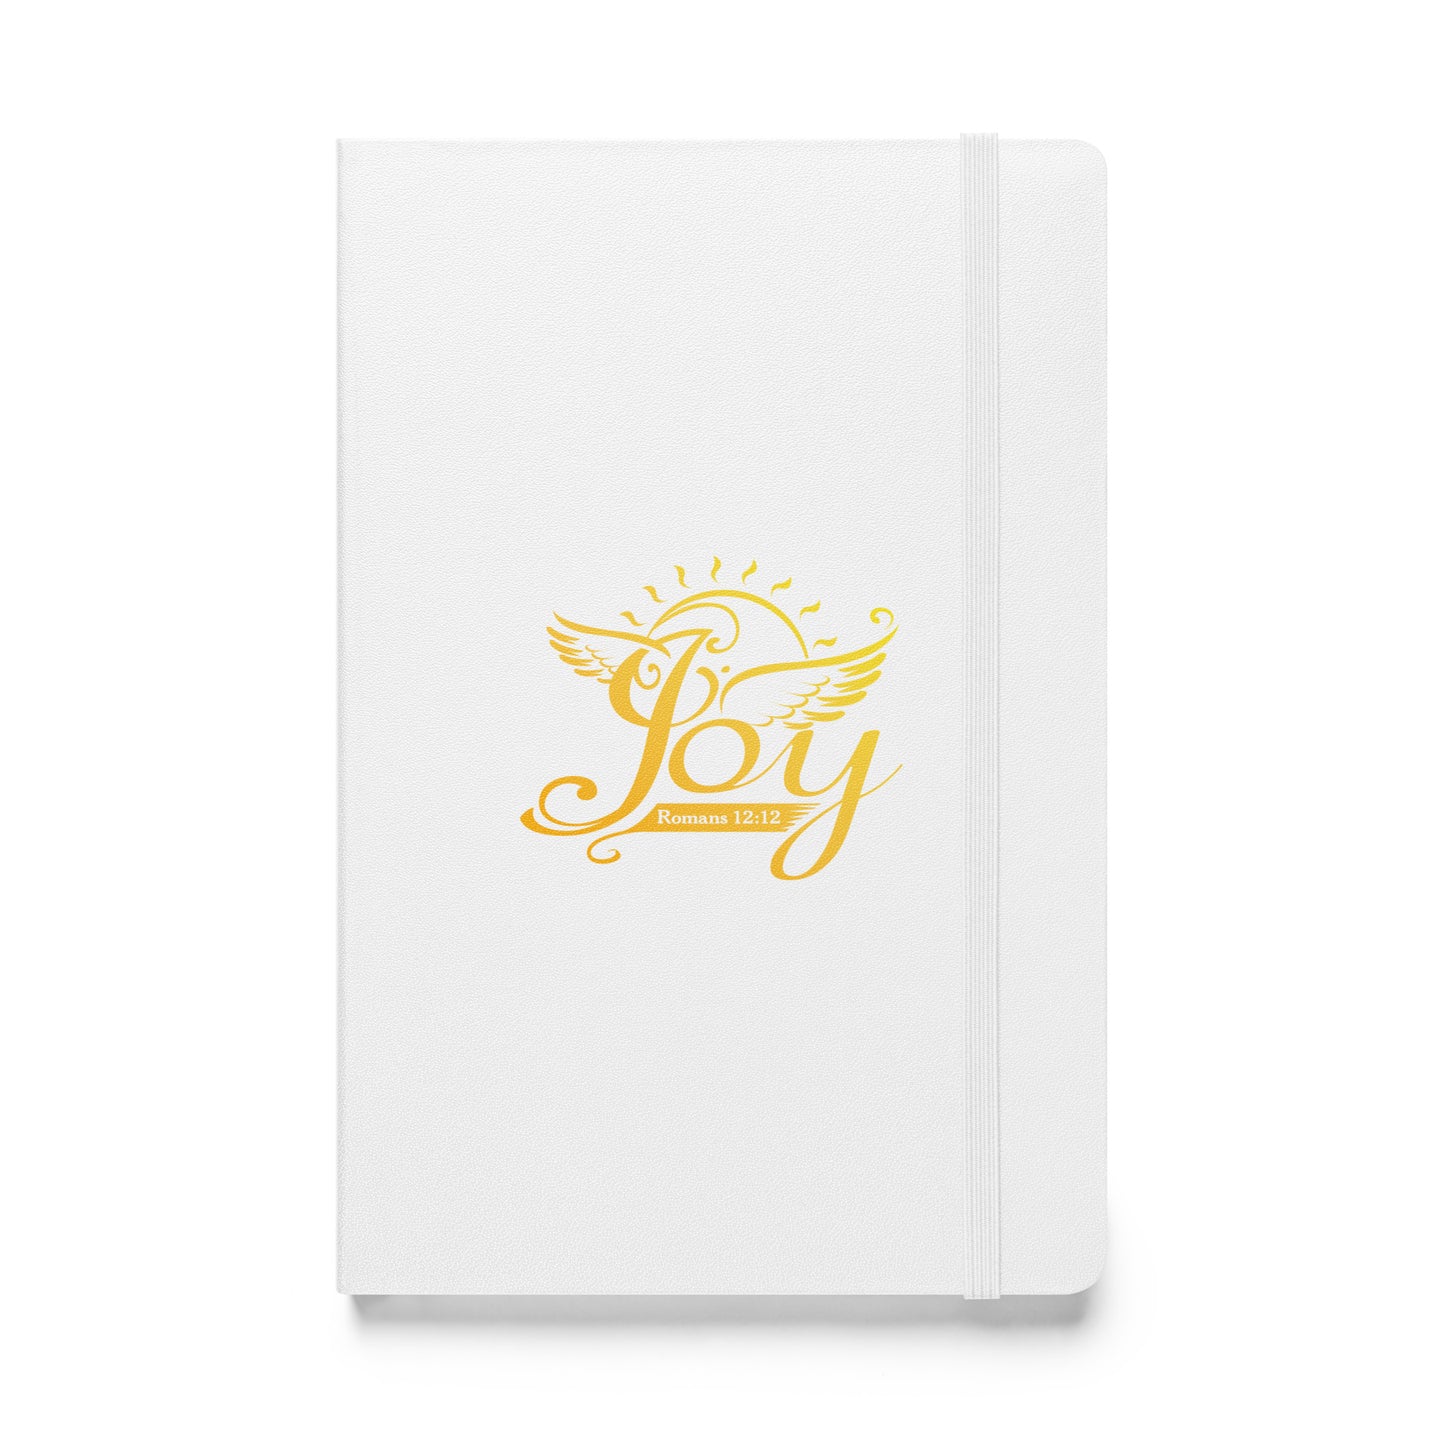 Joy - Hardcover bound notebook